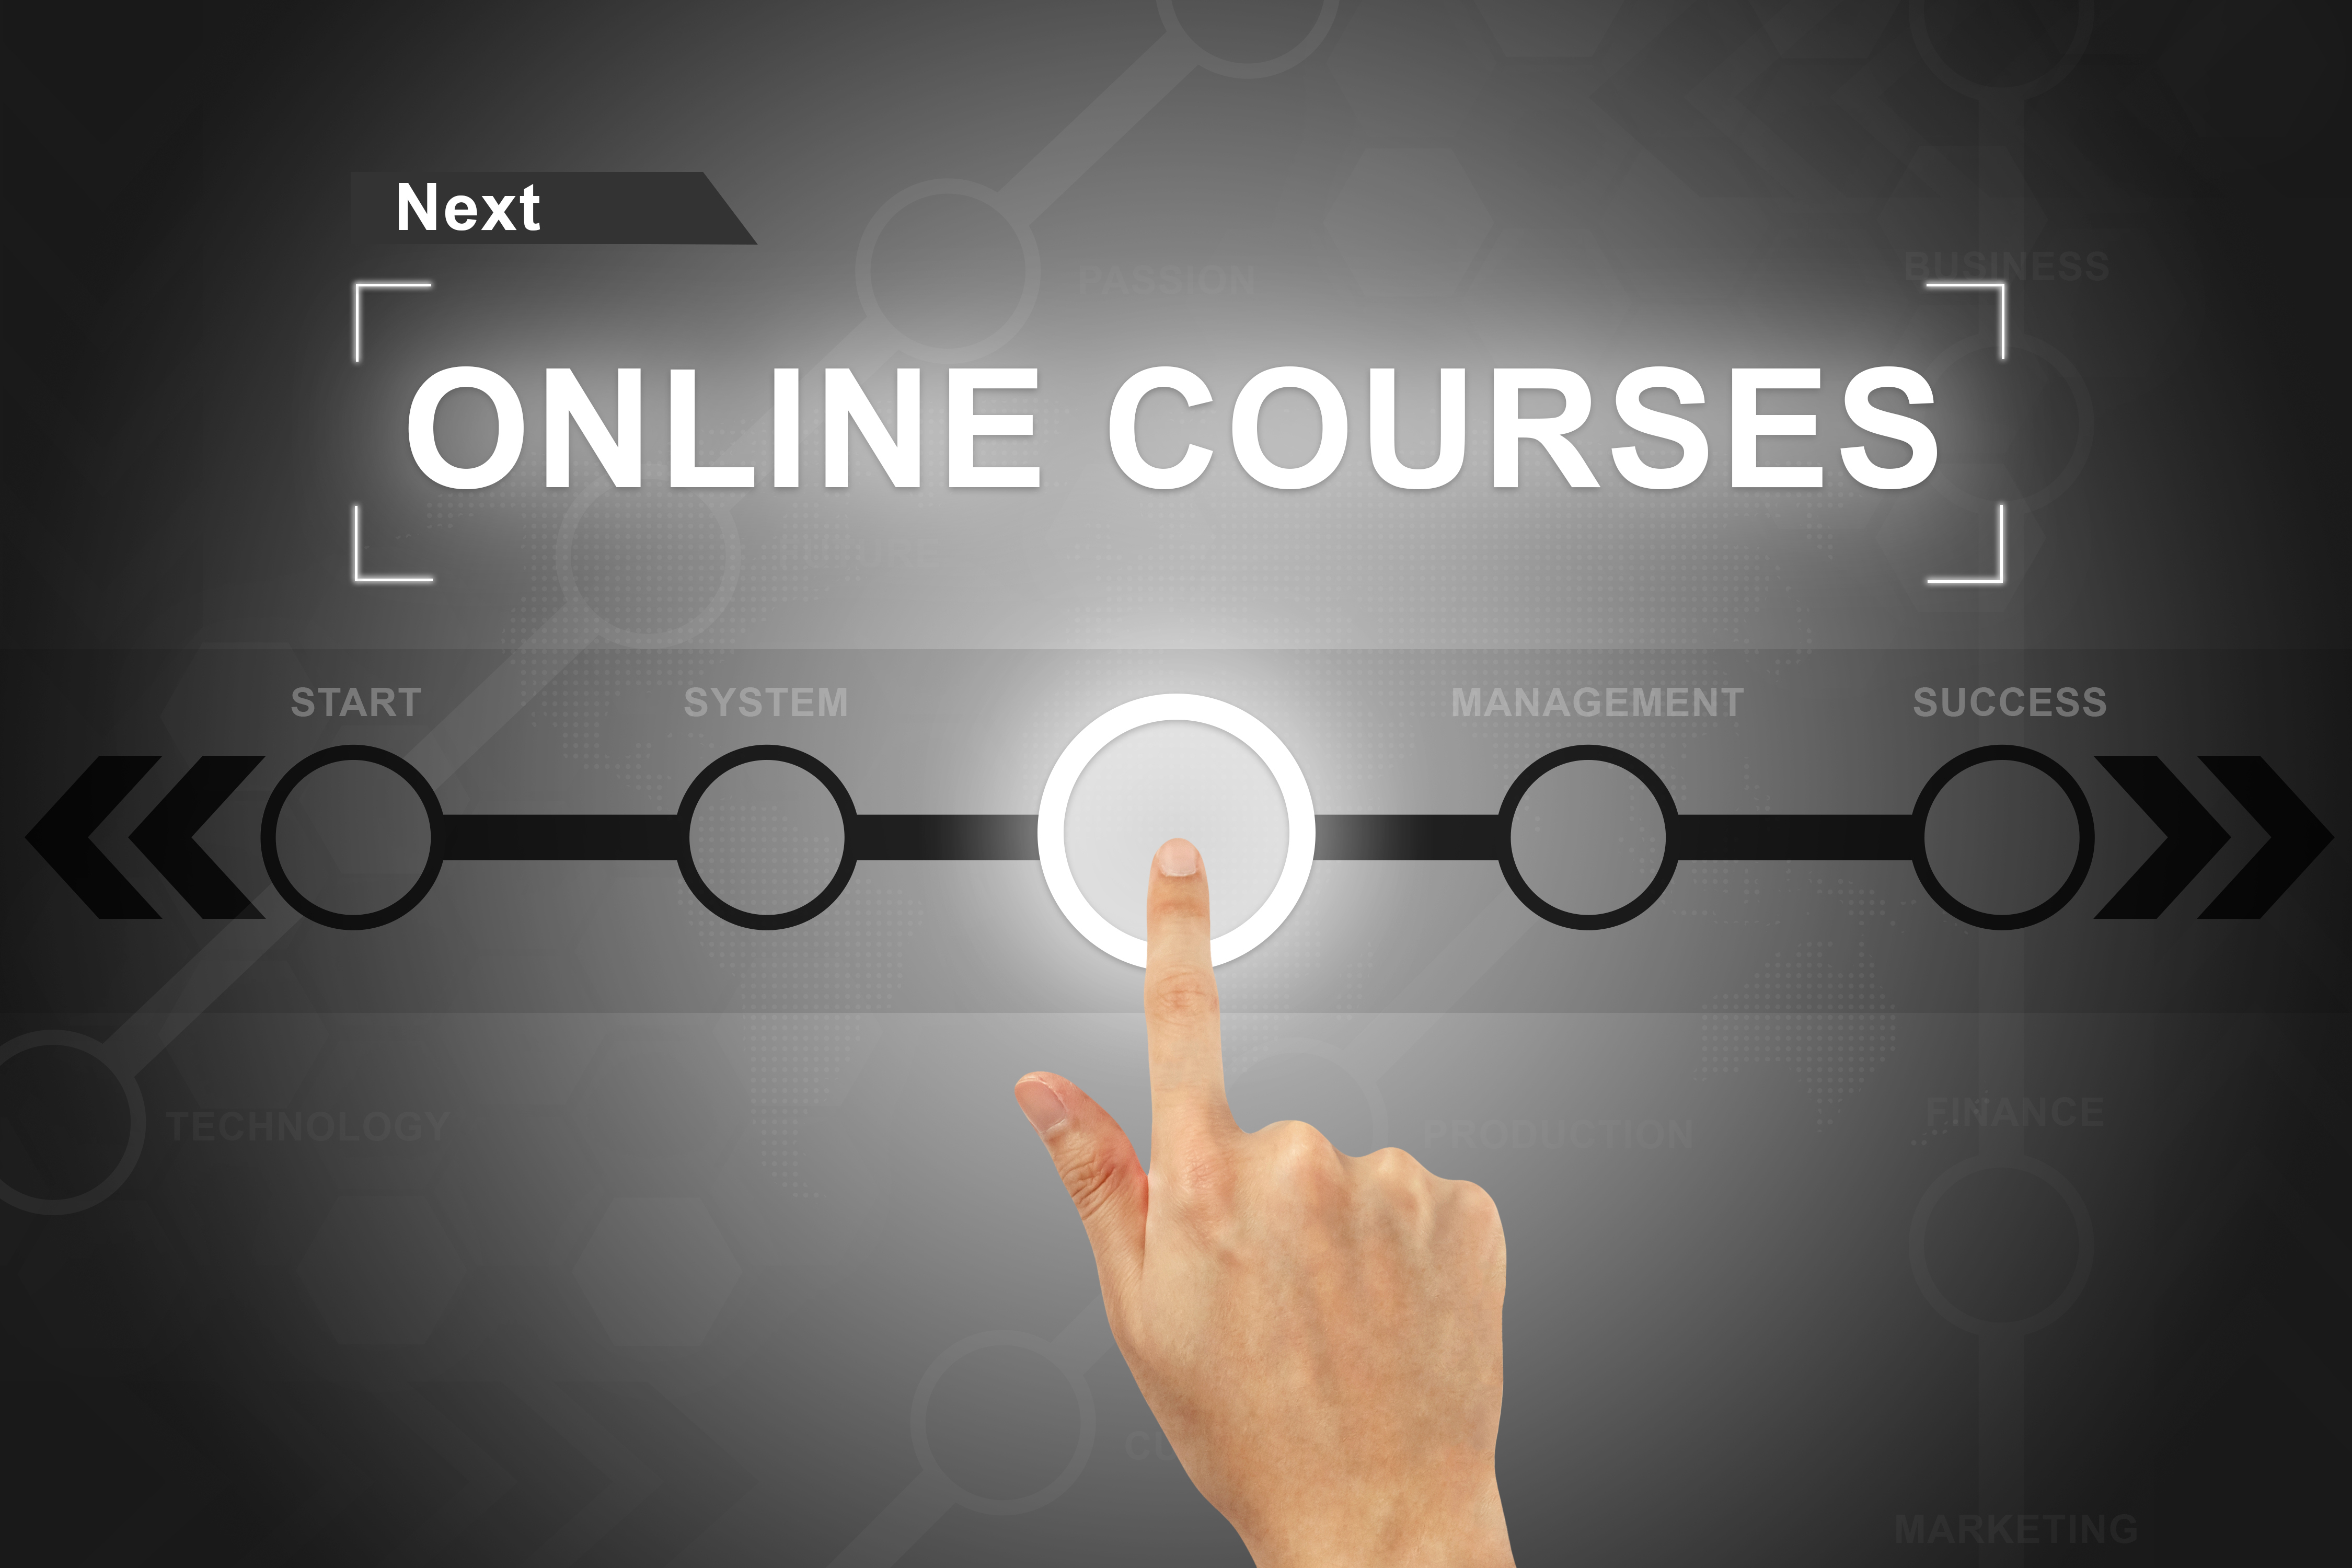 Succeeding in online career training